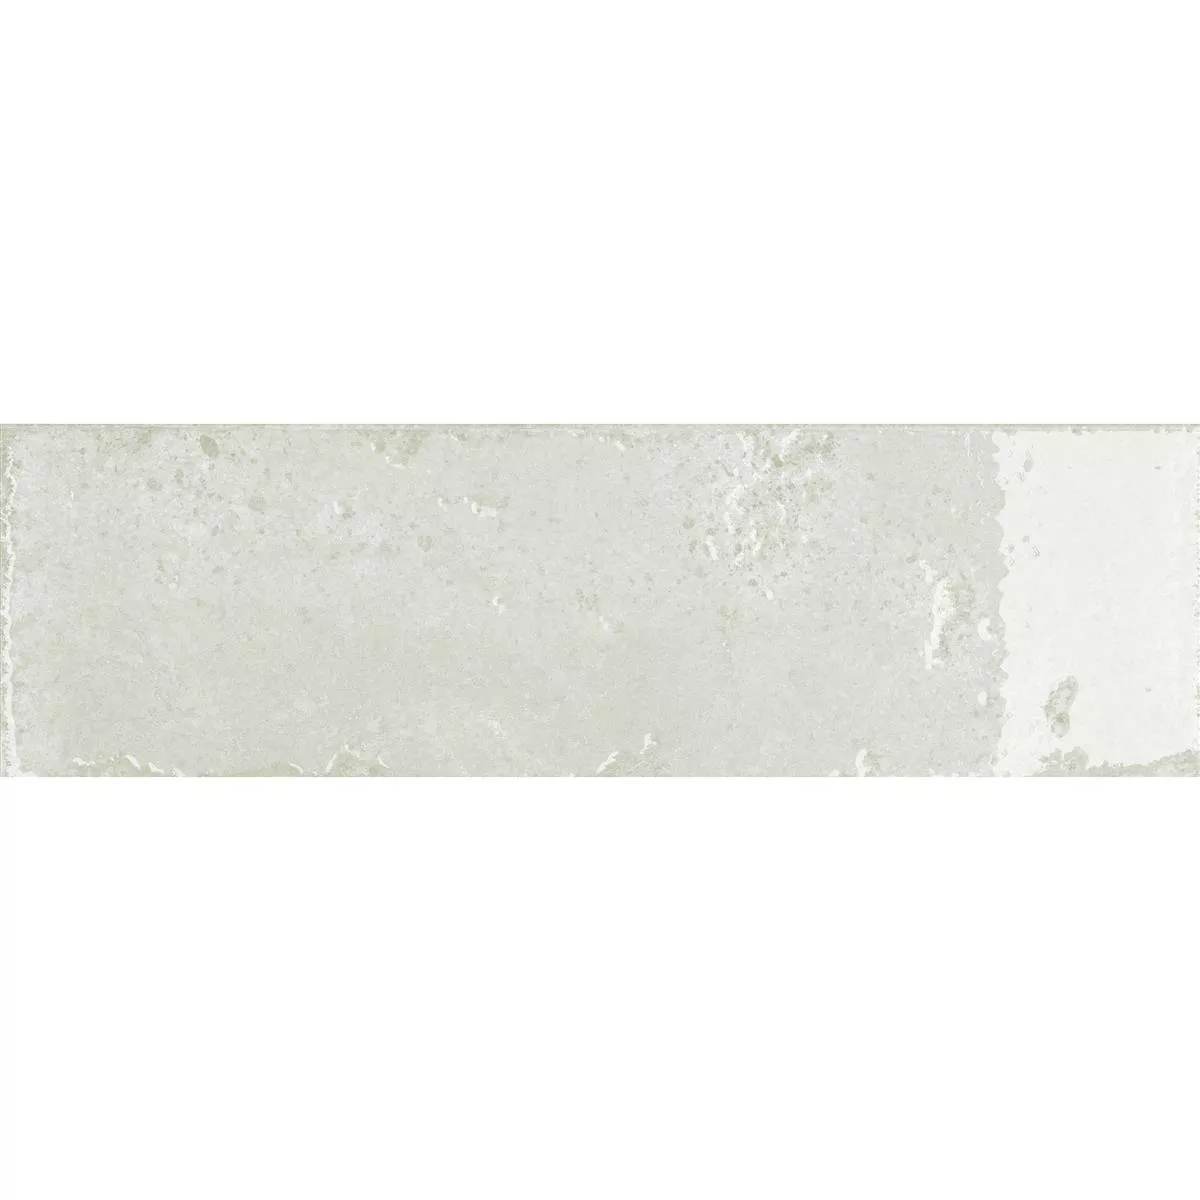 Échantillon Carrelage Mural Lara Brillant Ondulé 10x30cm Blanc